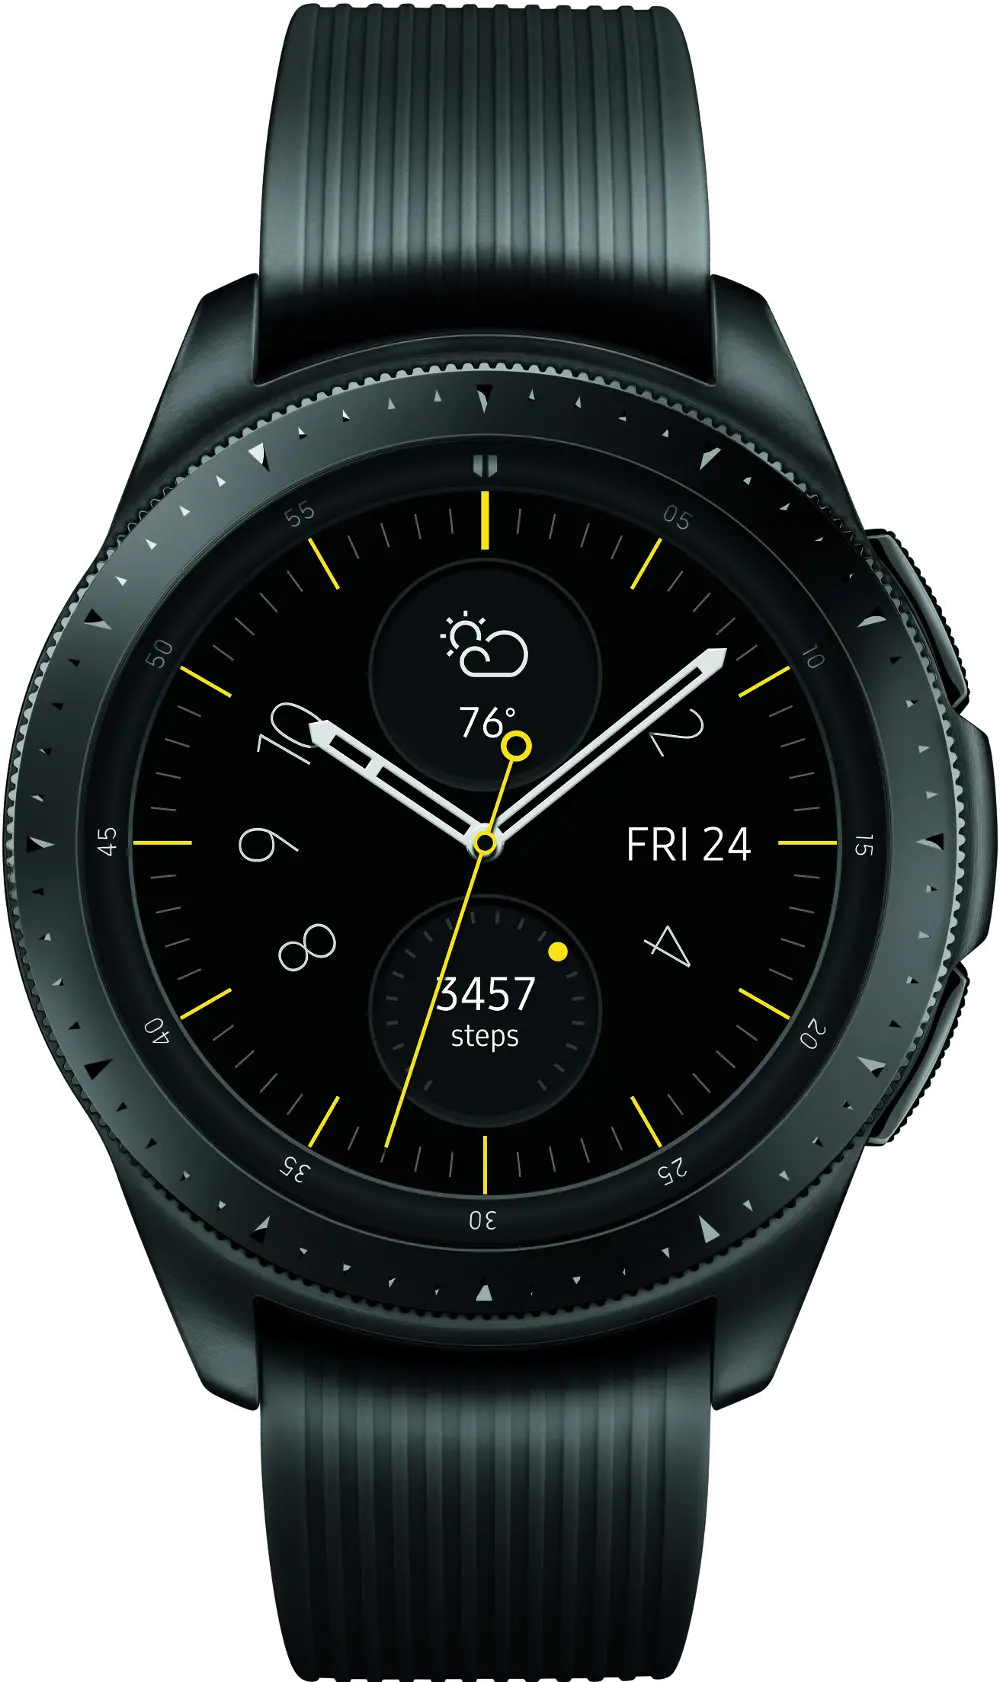 SM-R810NZKAXAR Samsung Galaxy Smartwatch - Midnight Black-1